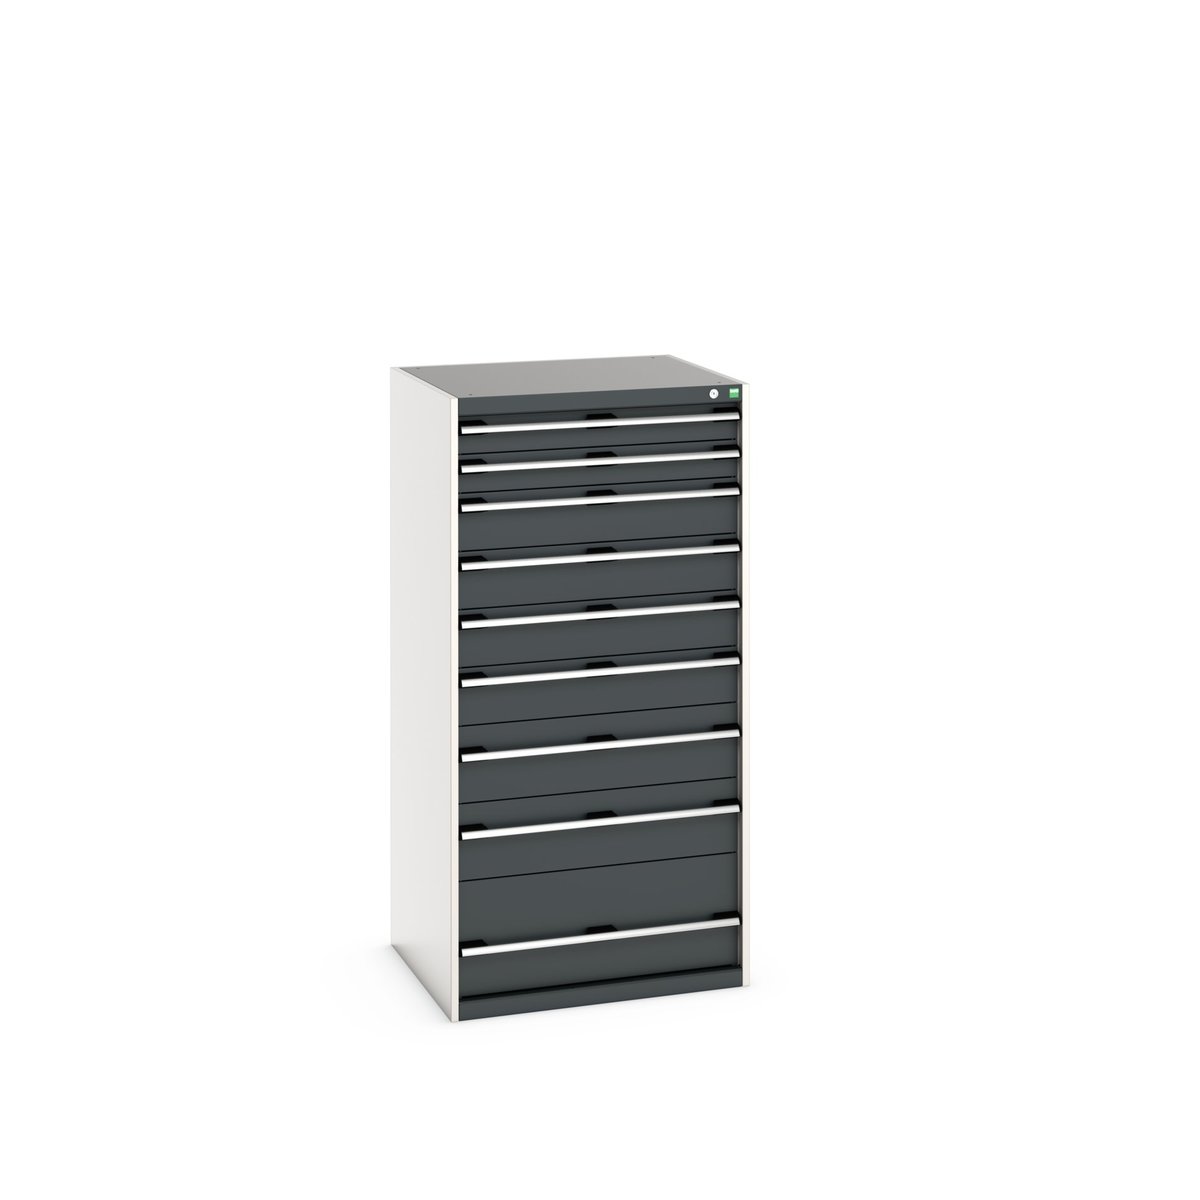 40028040. - cubio drawer cabinet 